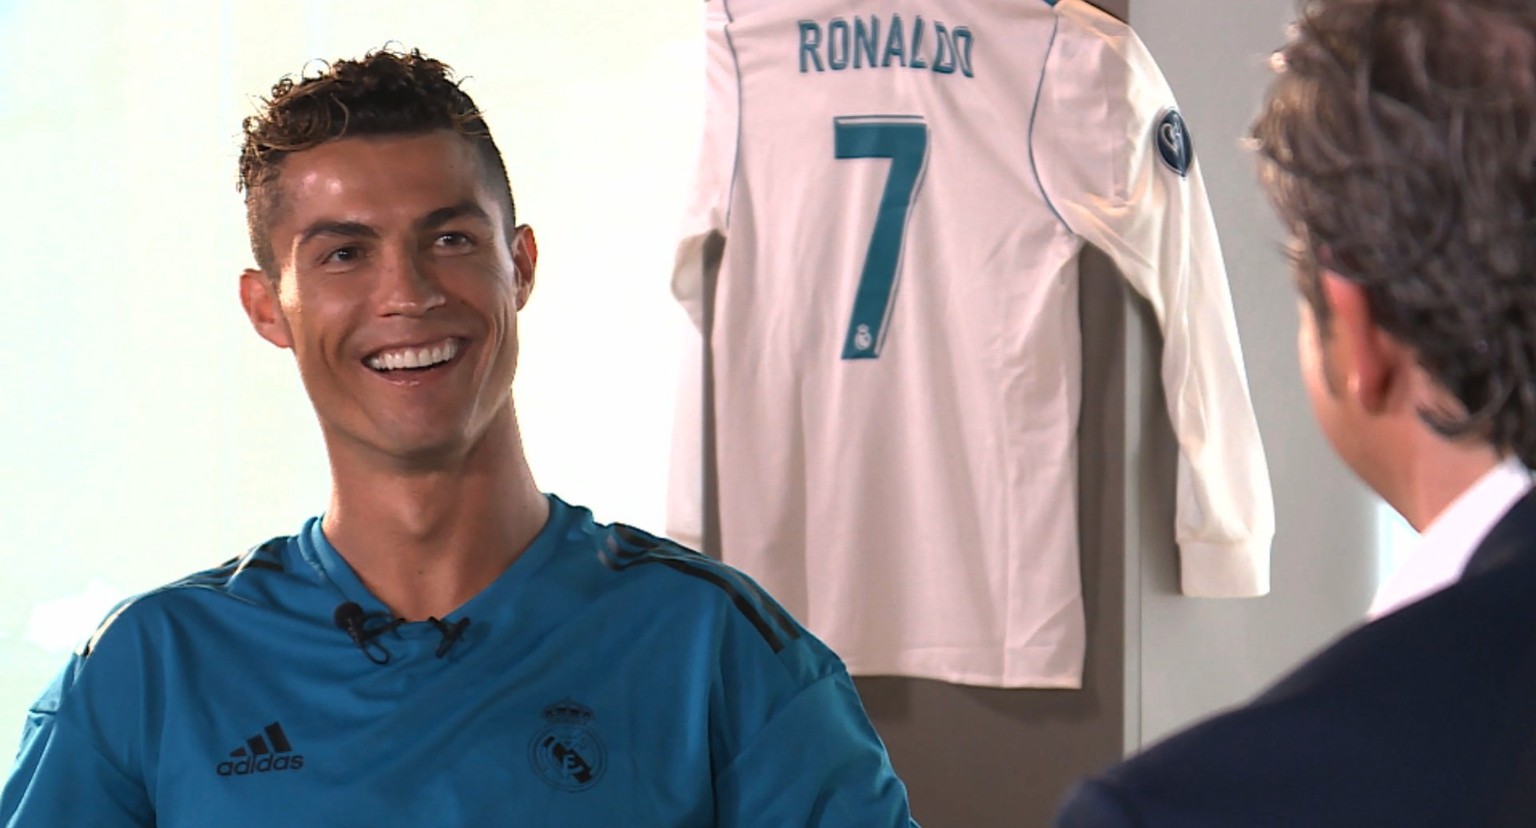 Ronaldo im Interview mit TV-Moderator Josep Pedrerol von «El Chiringuito de Jugones».